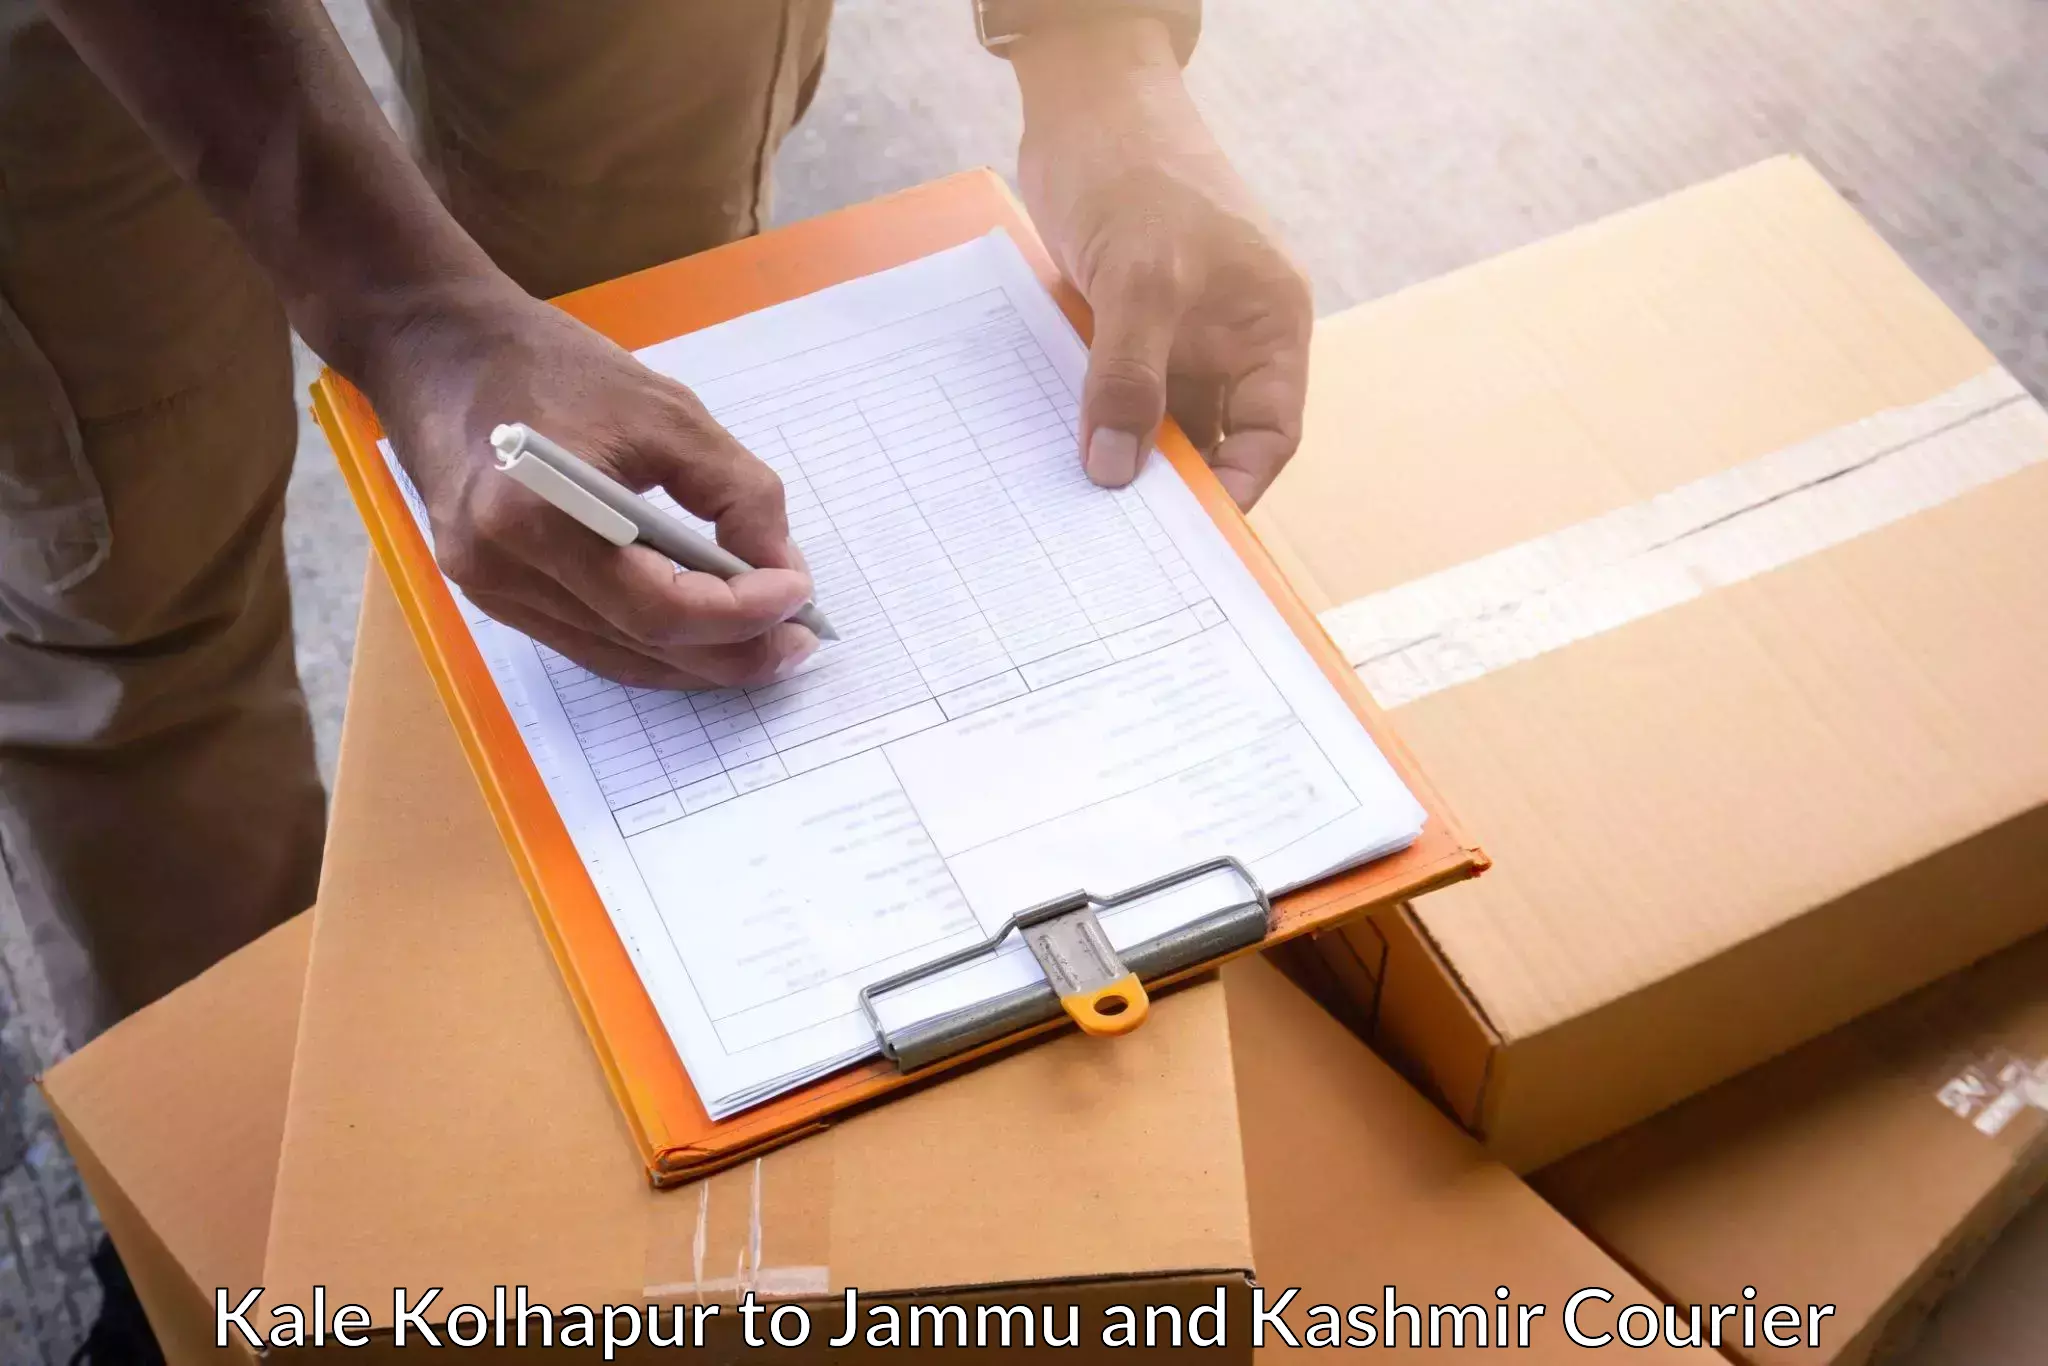 24/7 courier service in Kale Kolhapur to Kargil